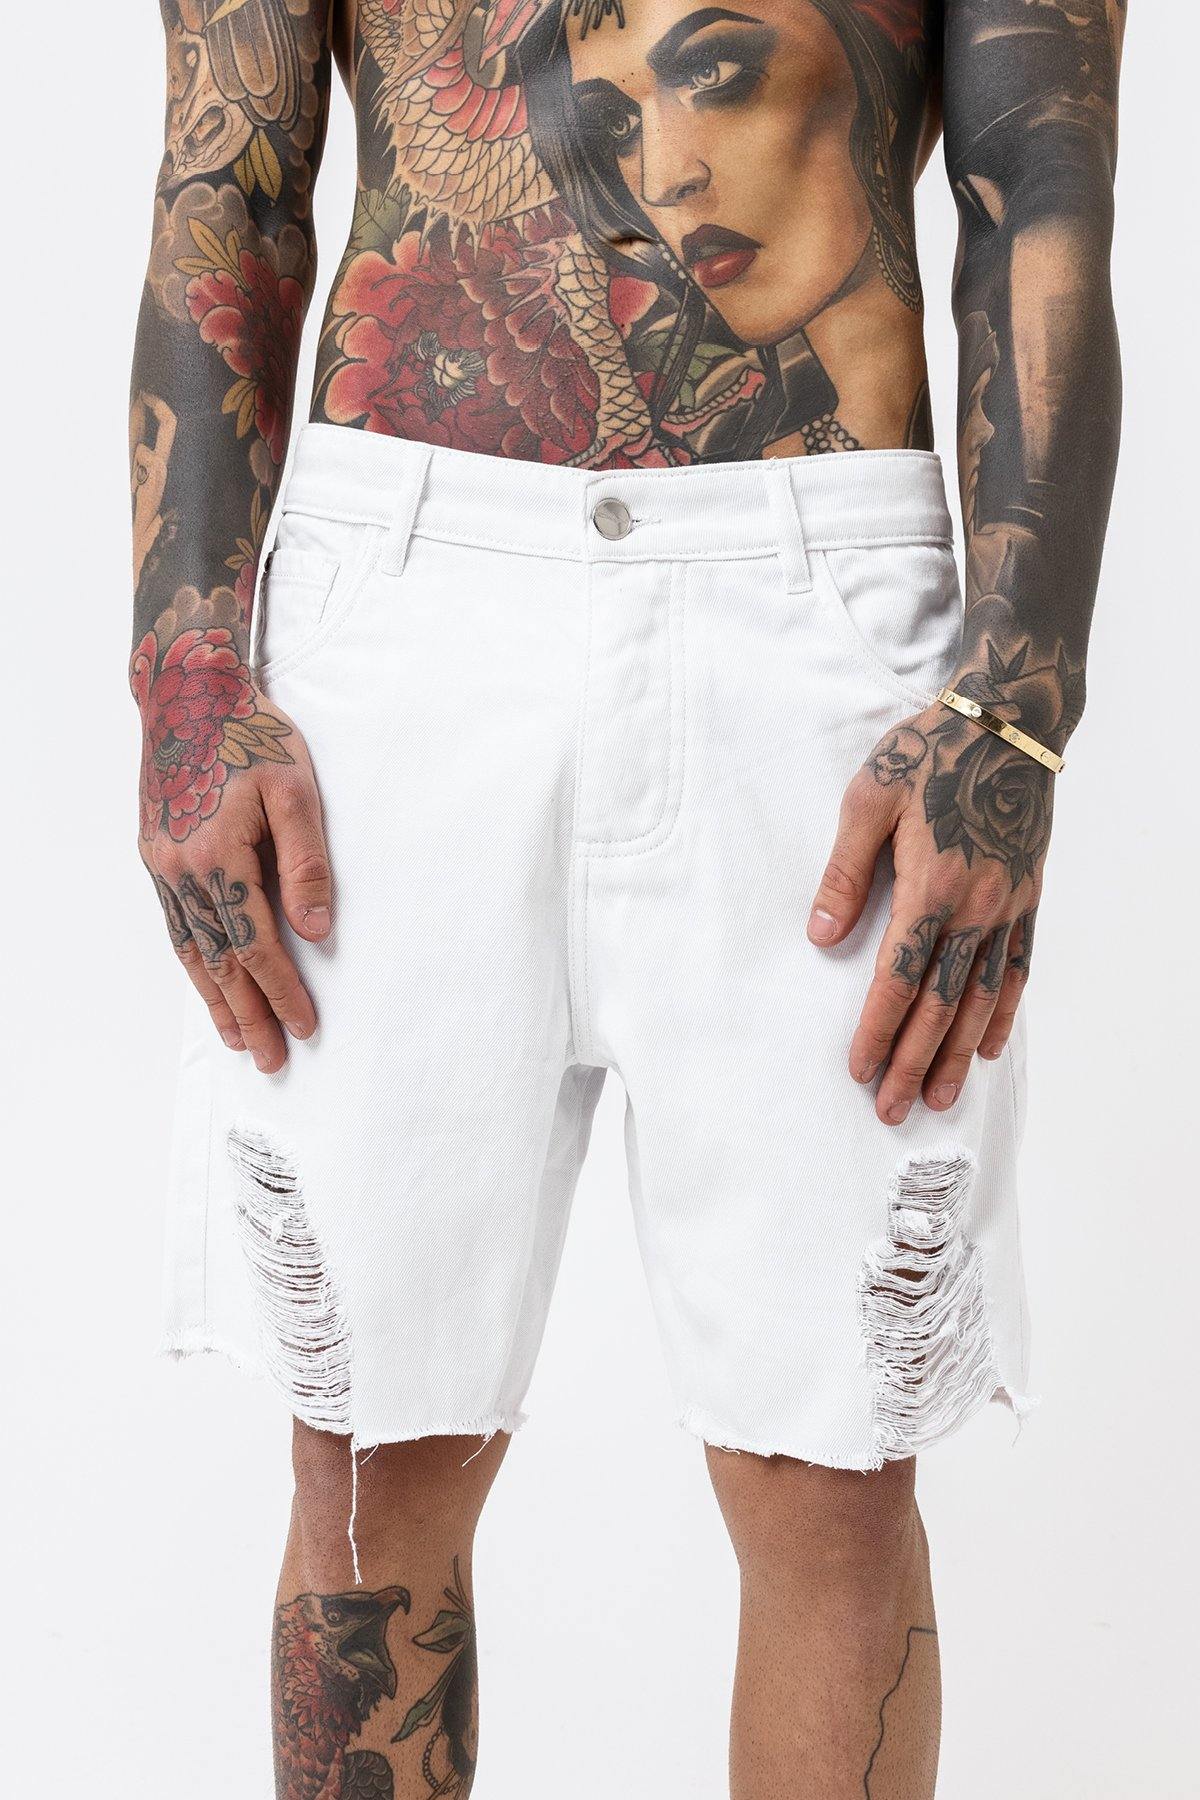 Shredded White Denim Shorts - BlackBeard Fashion Lounge - 